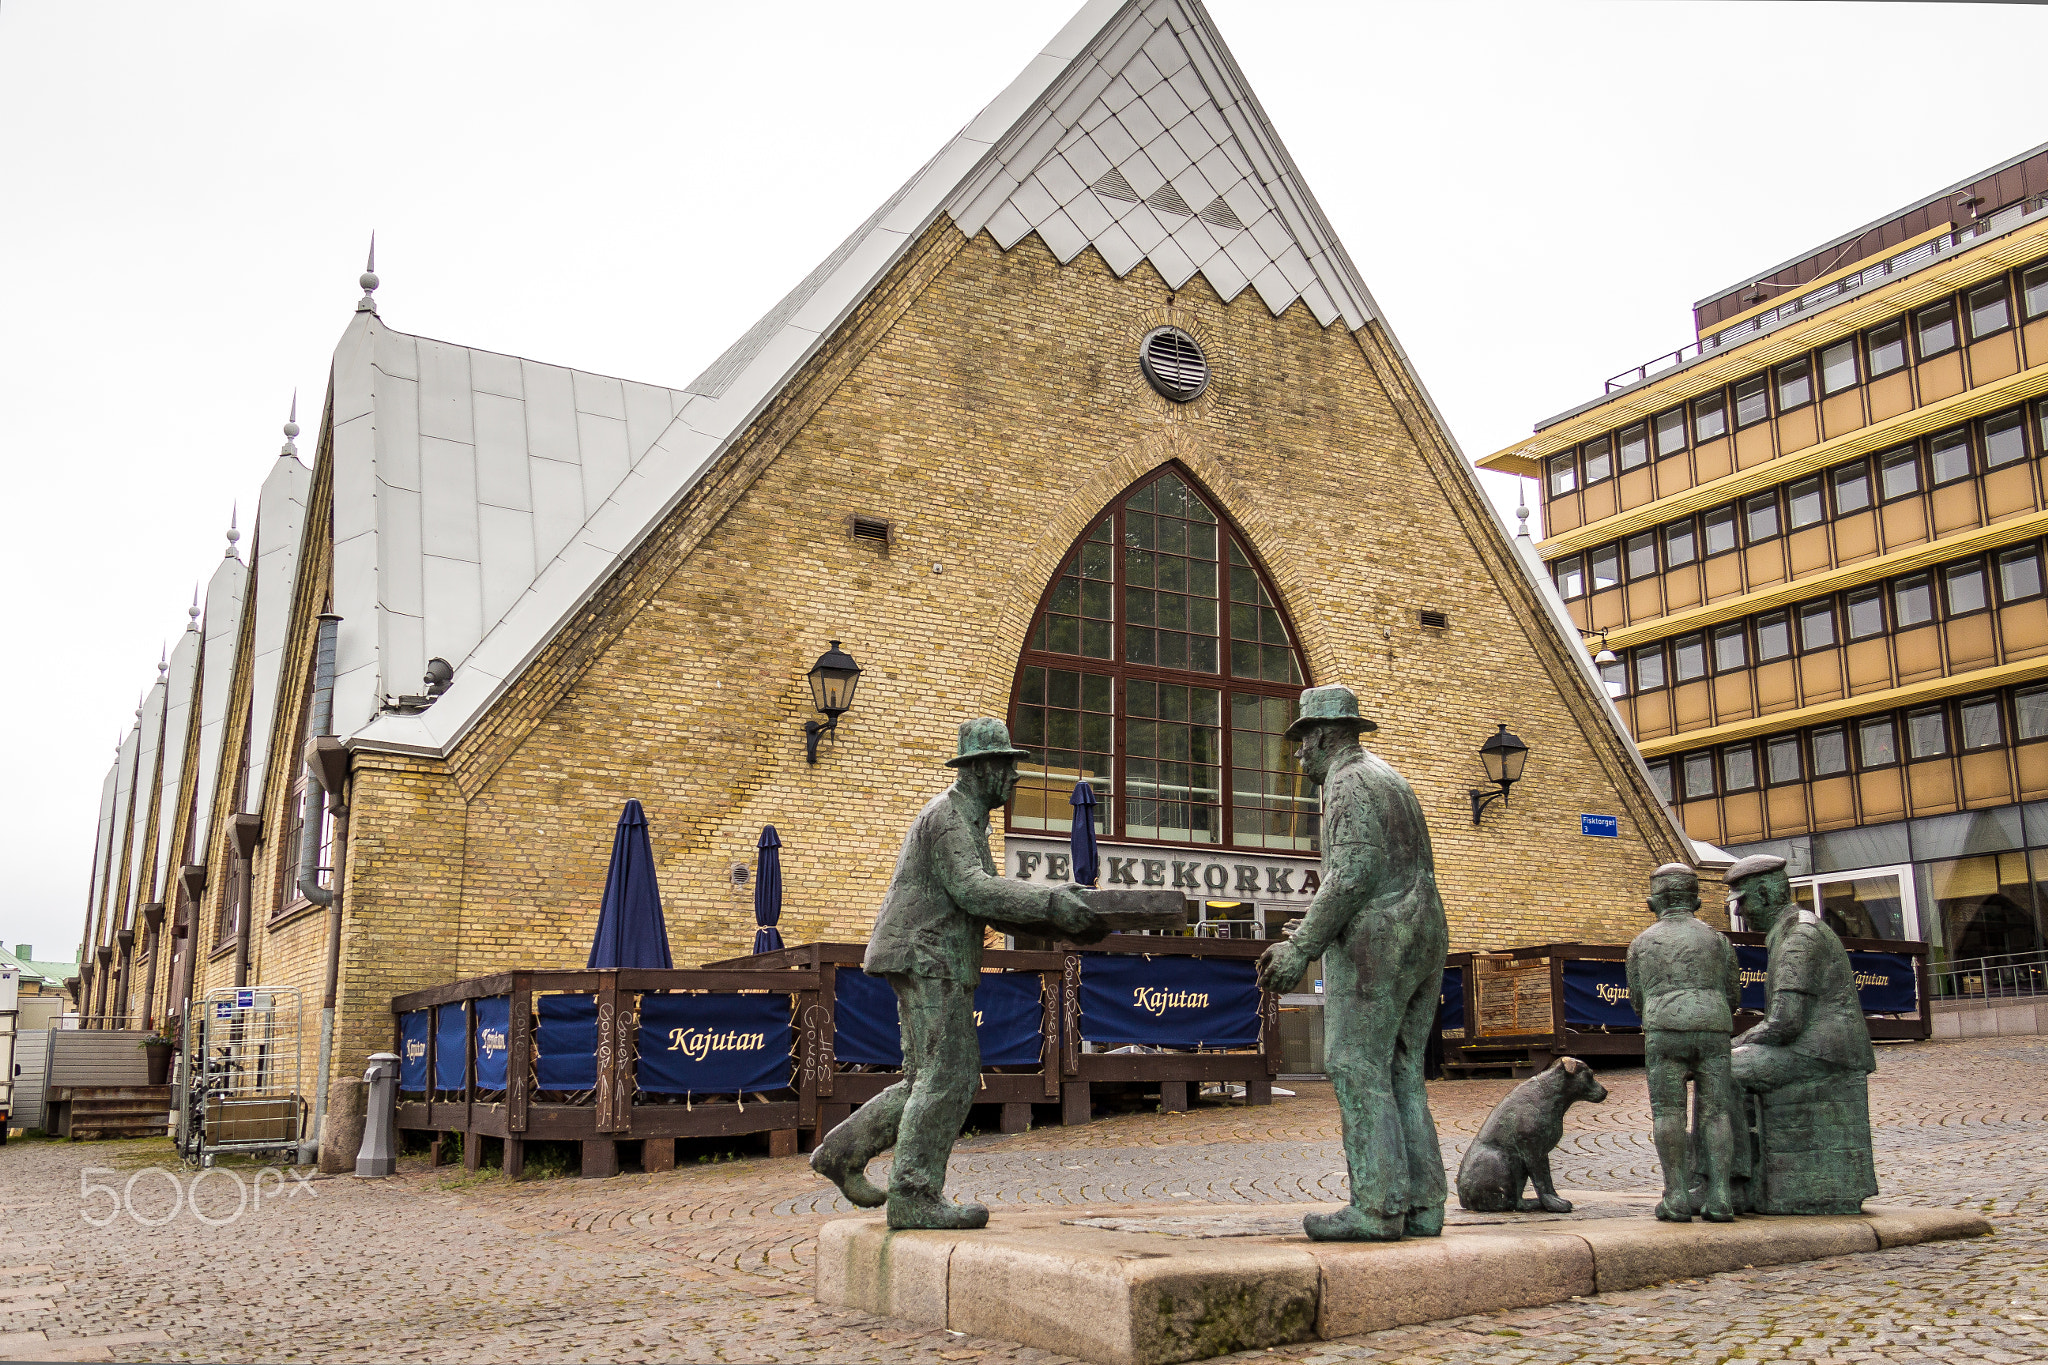 Göteborg Fish Church